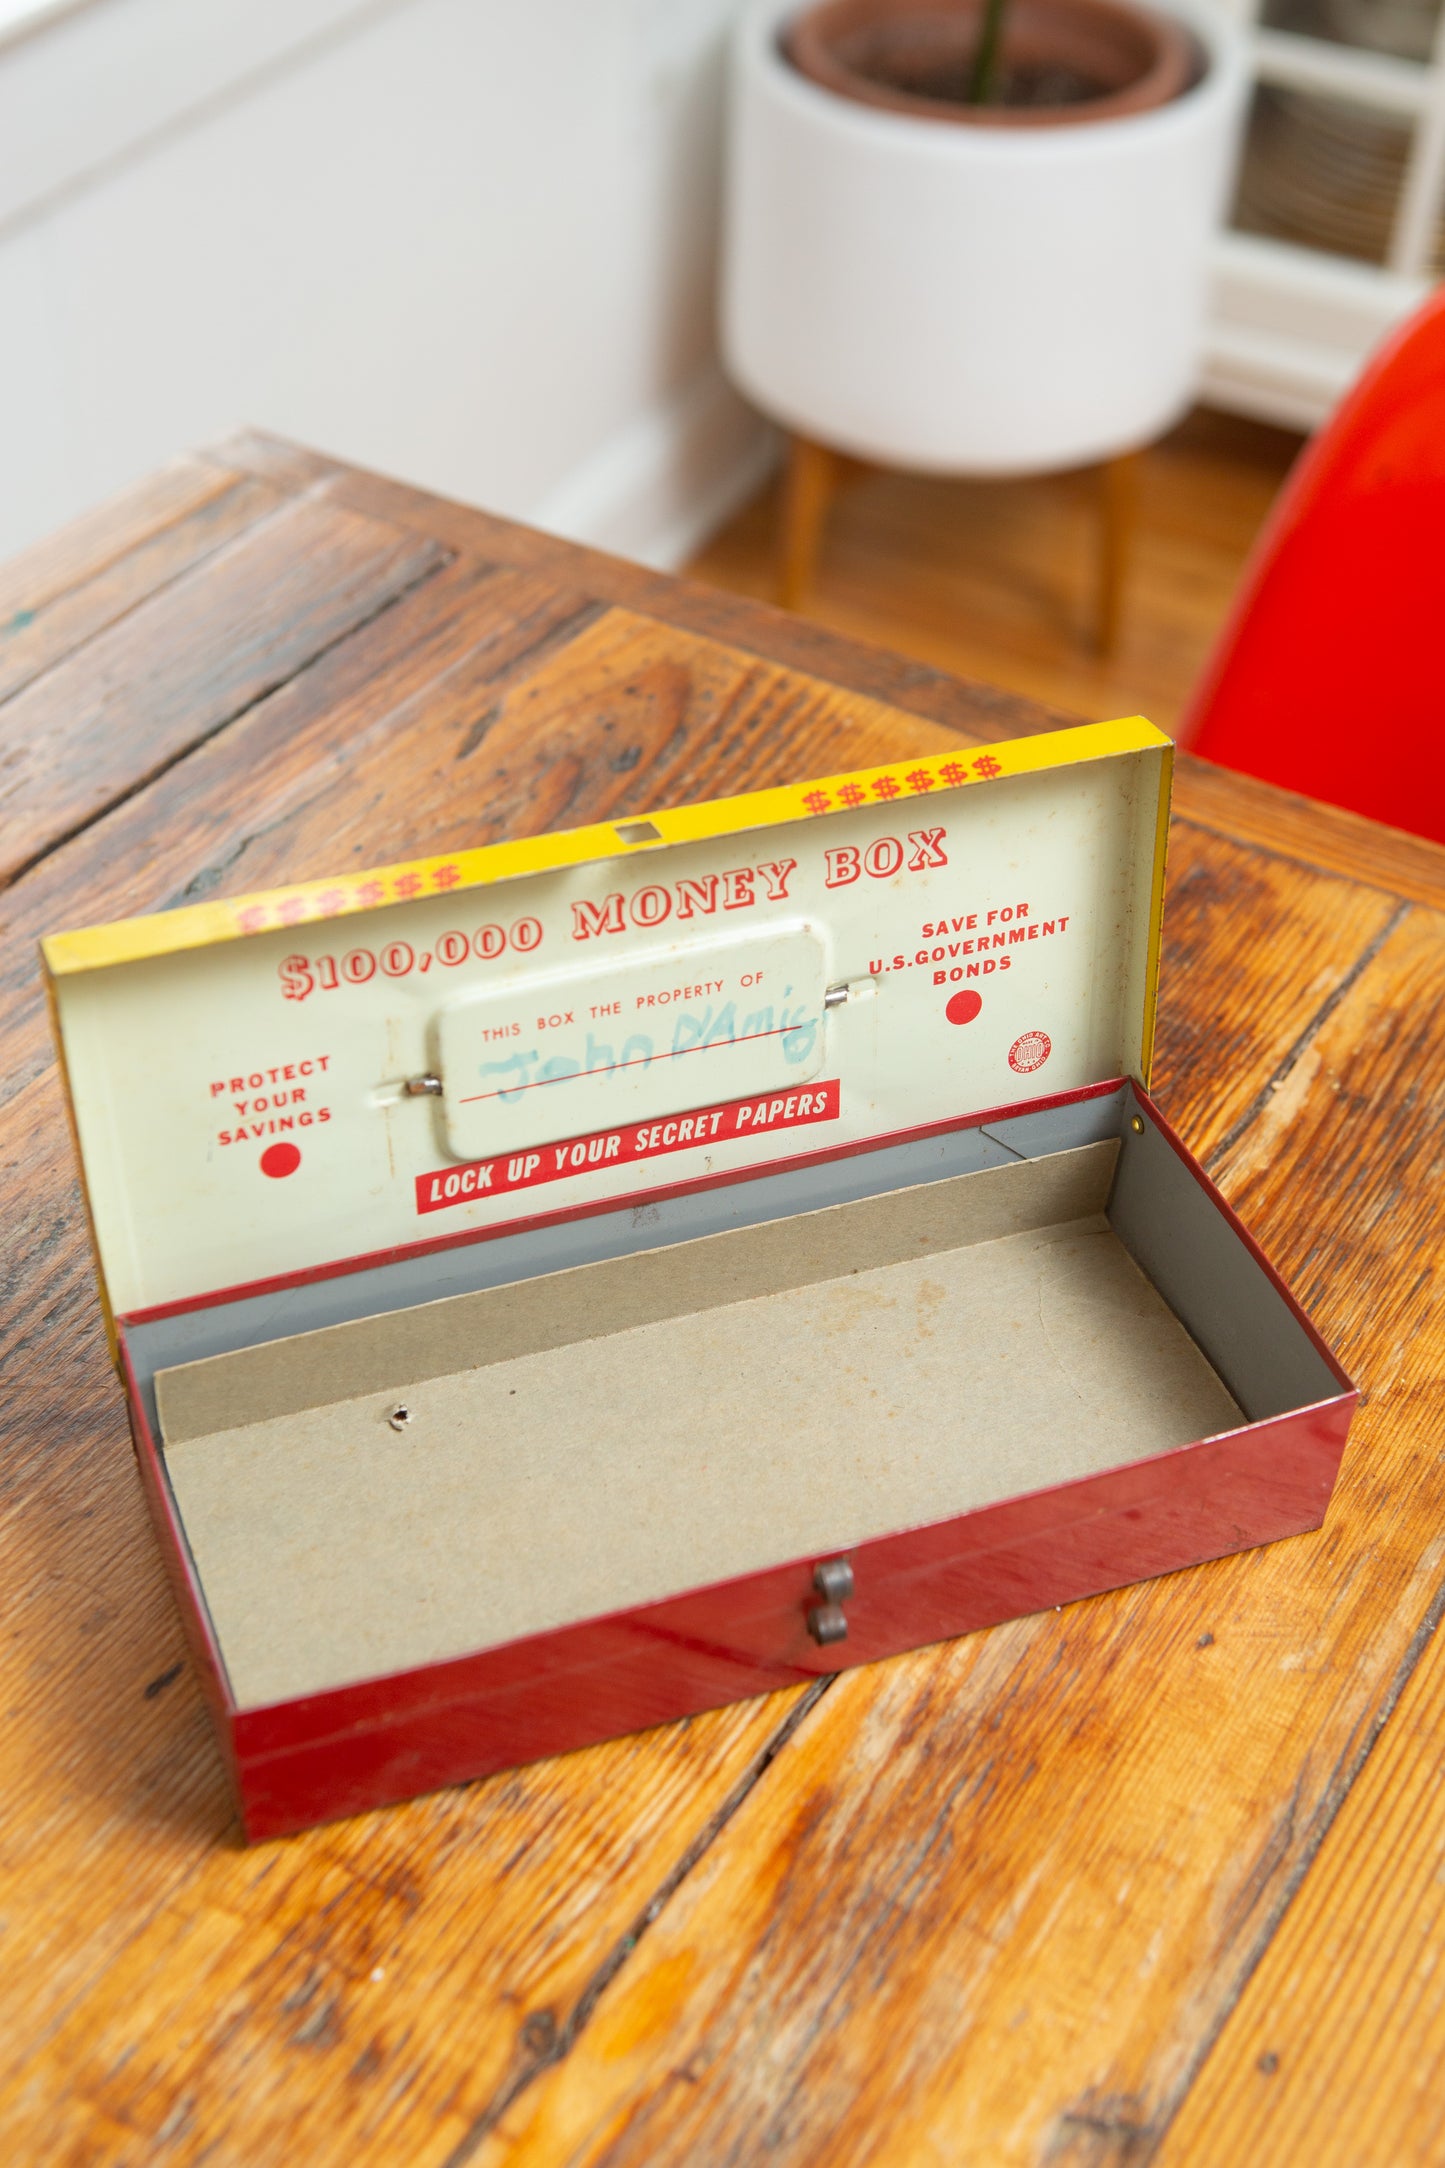 Vintage Tin $100,000 Money Box for ‘Secret Papers’